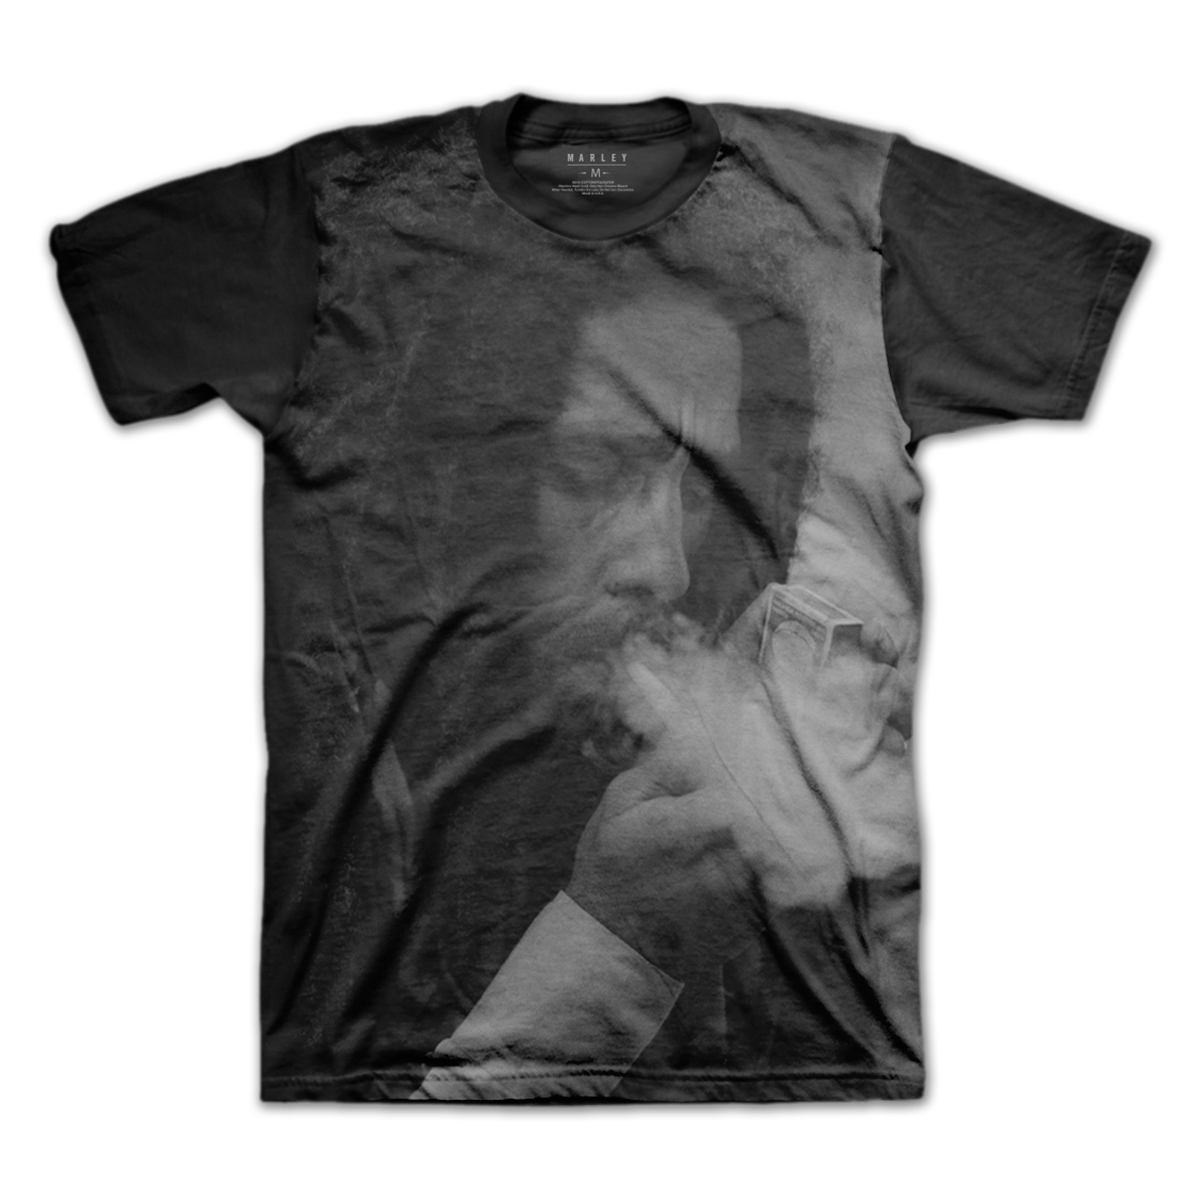 Bob Marley Classic Smoke Black T-Shirt – Men’s 